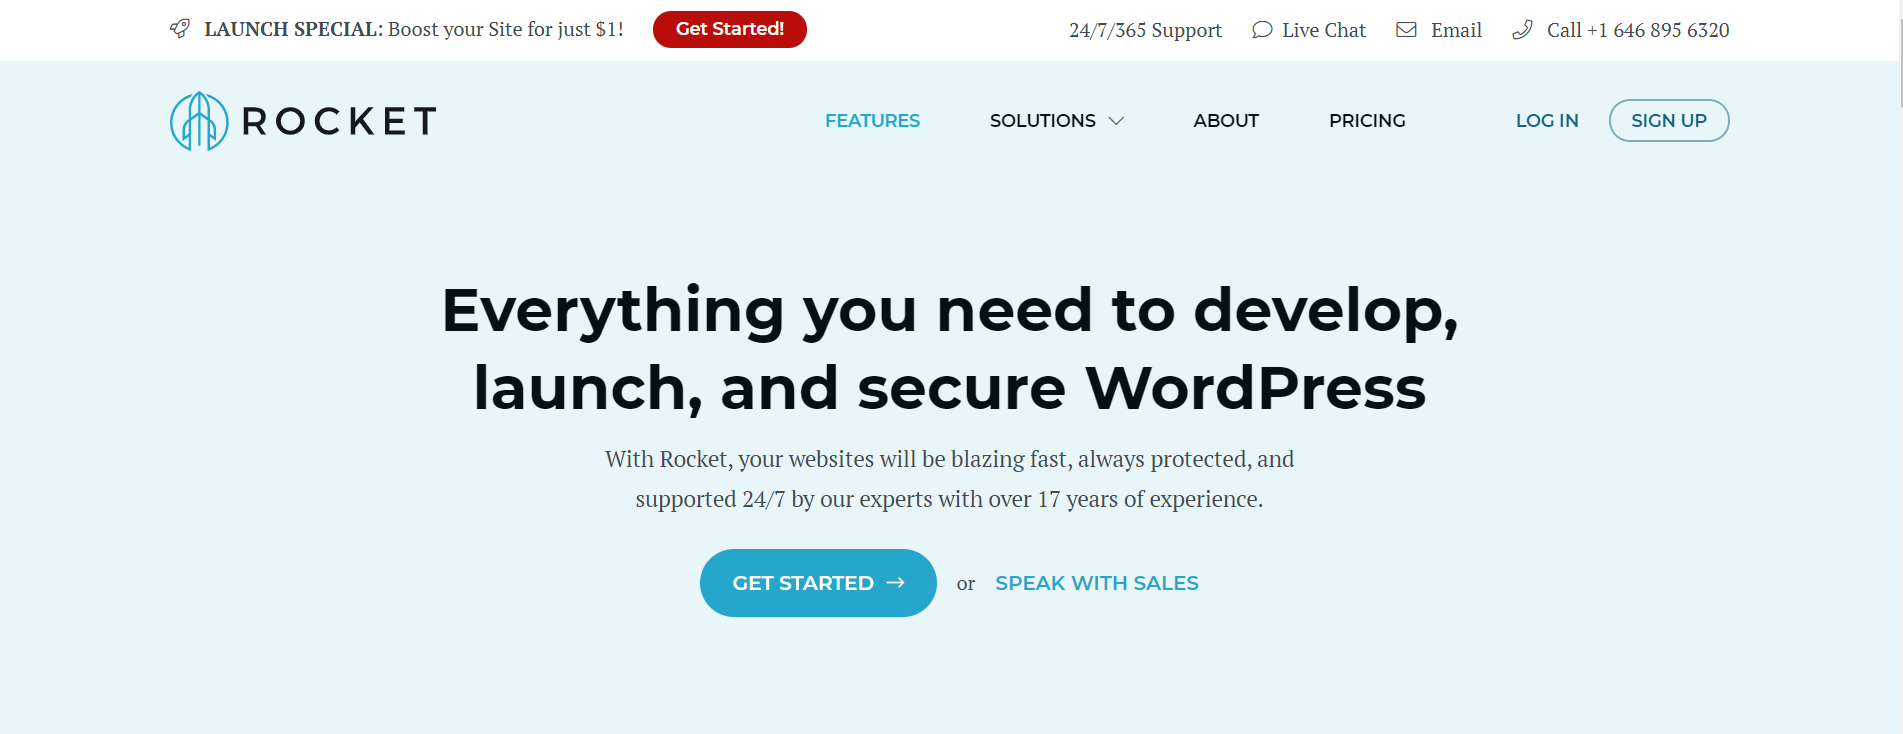 Rocket Review - Managed Wordpress Hosting